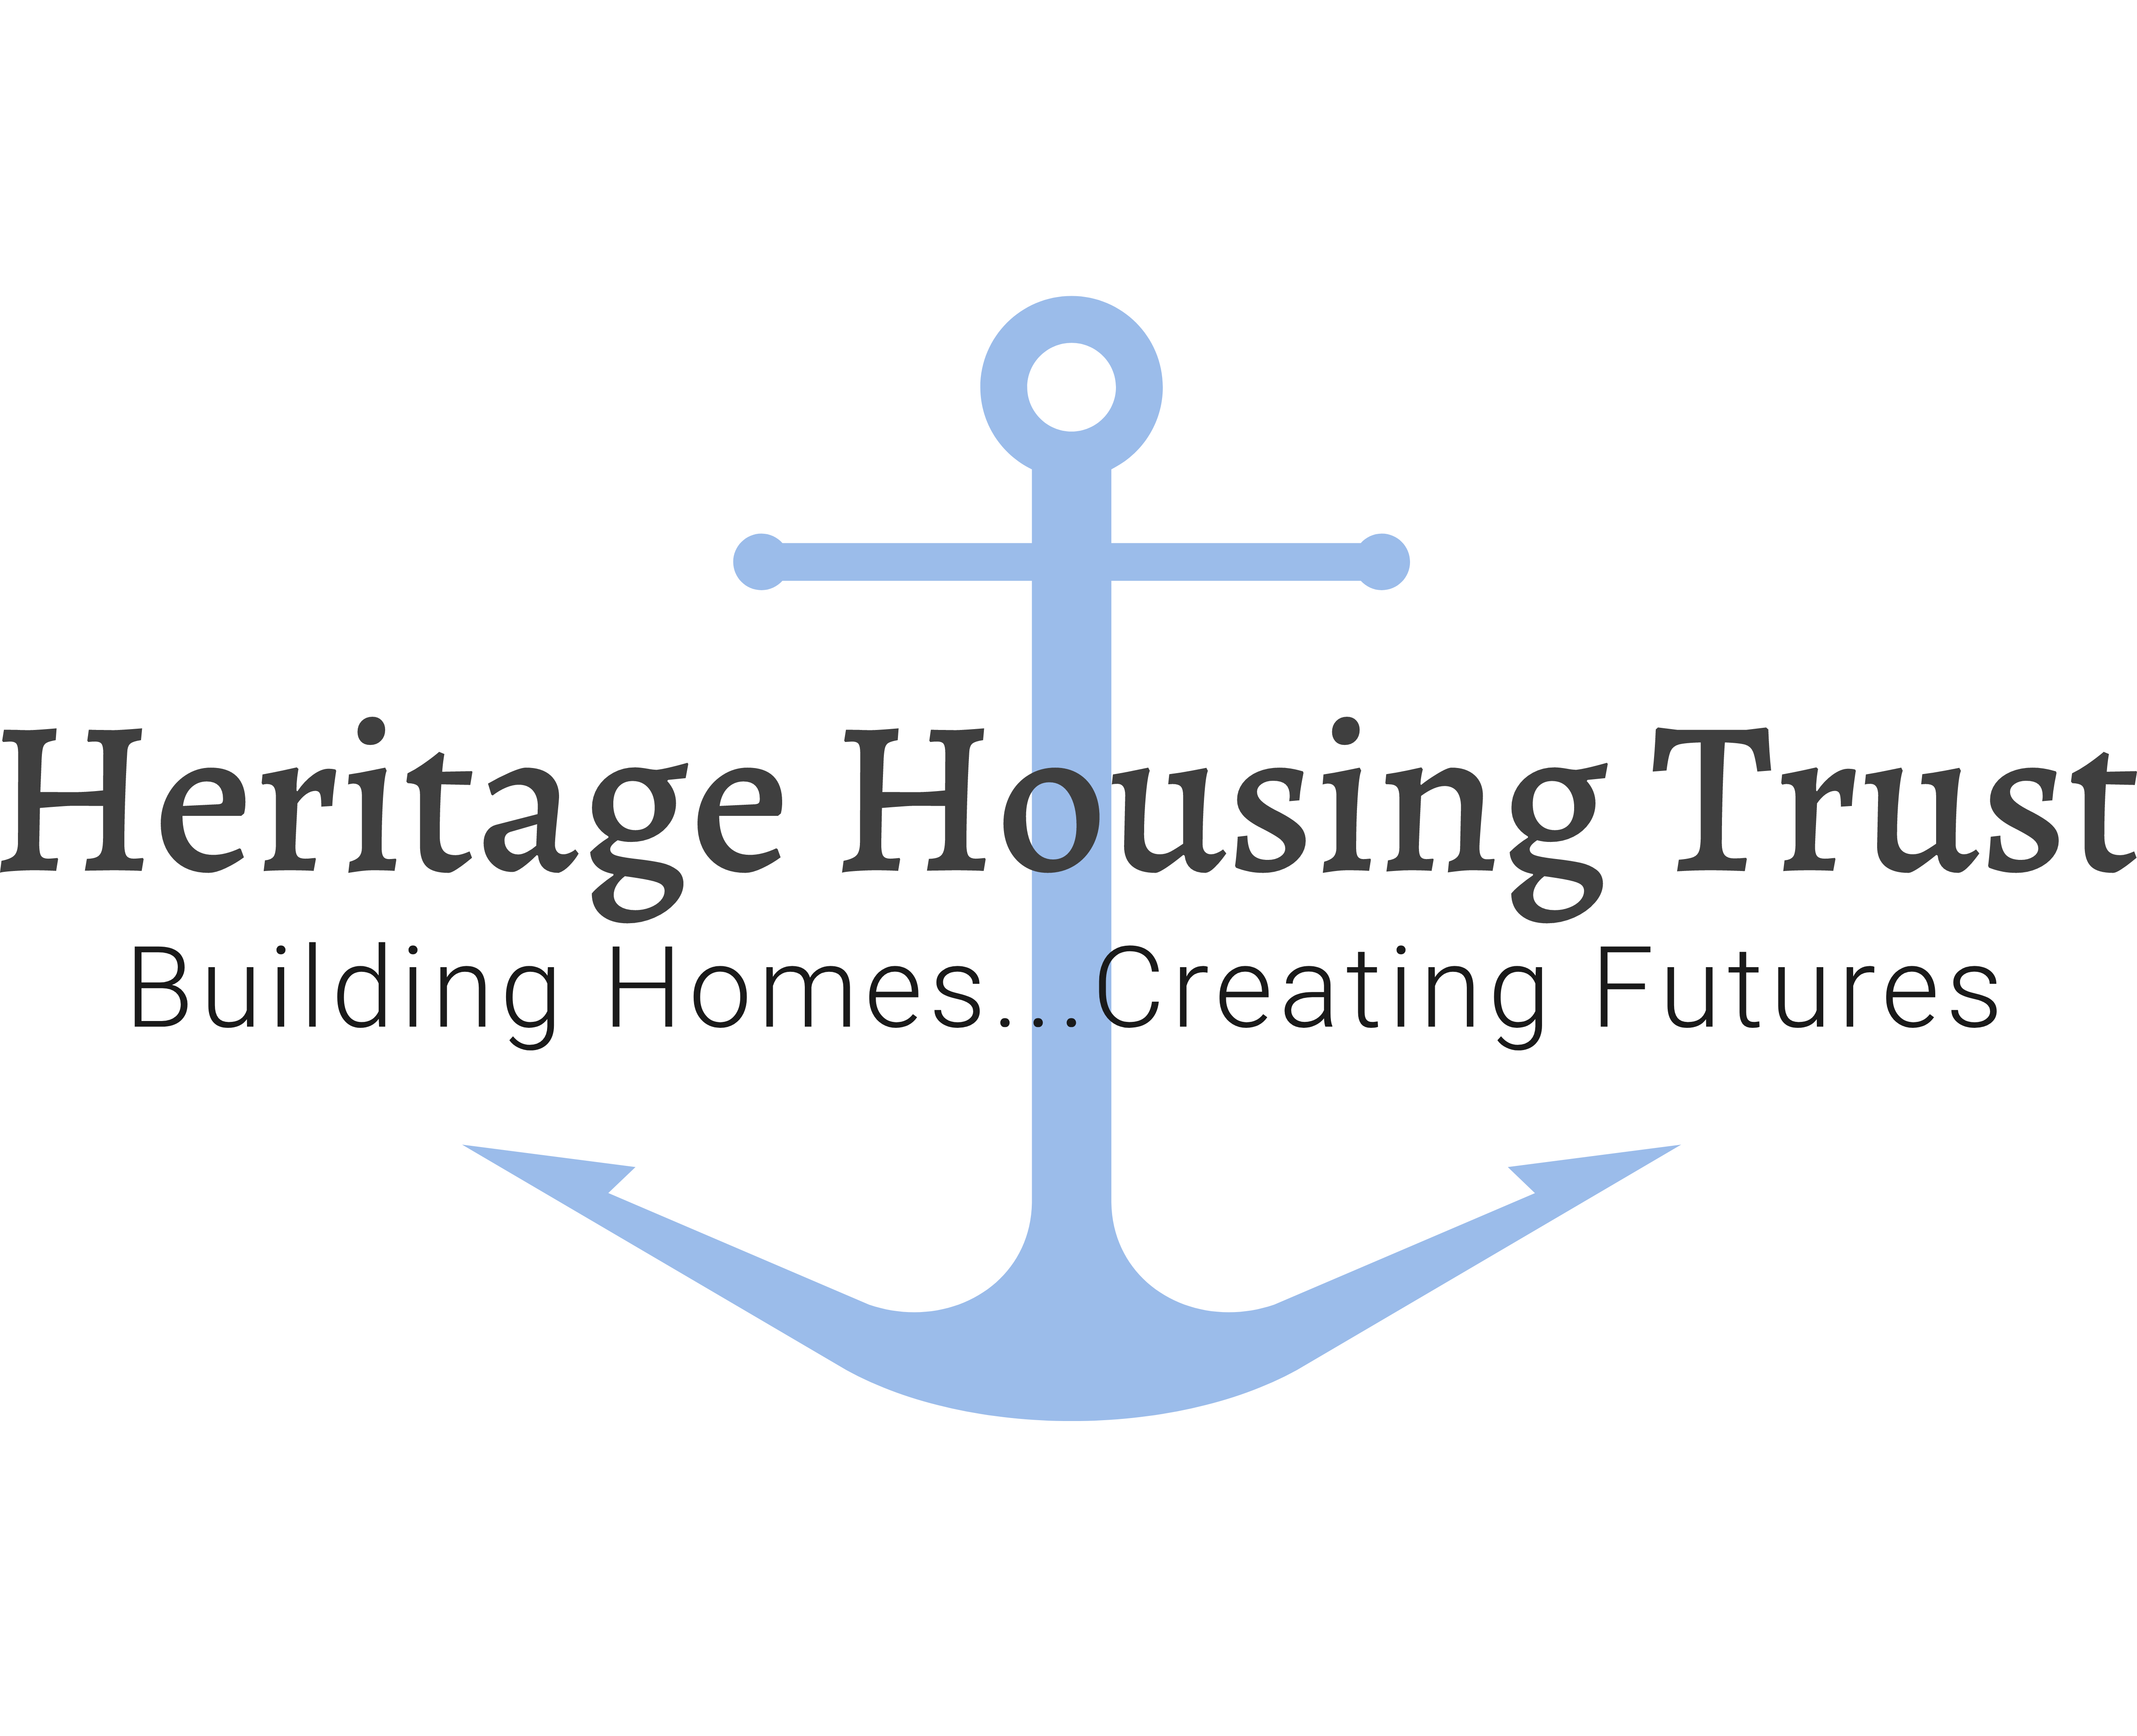 The Heritage Housing Trust logo